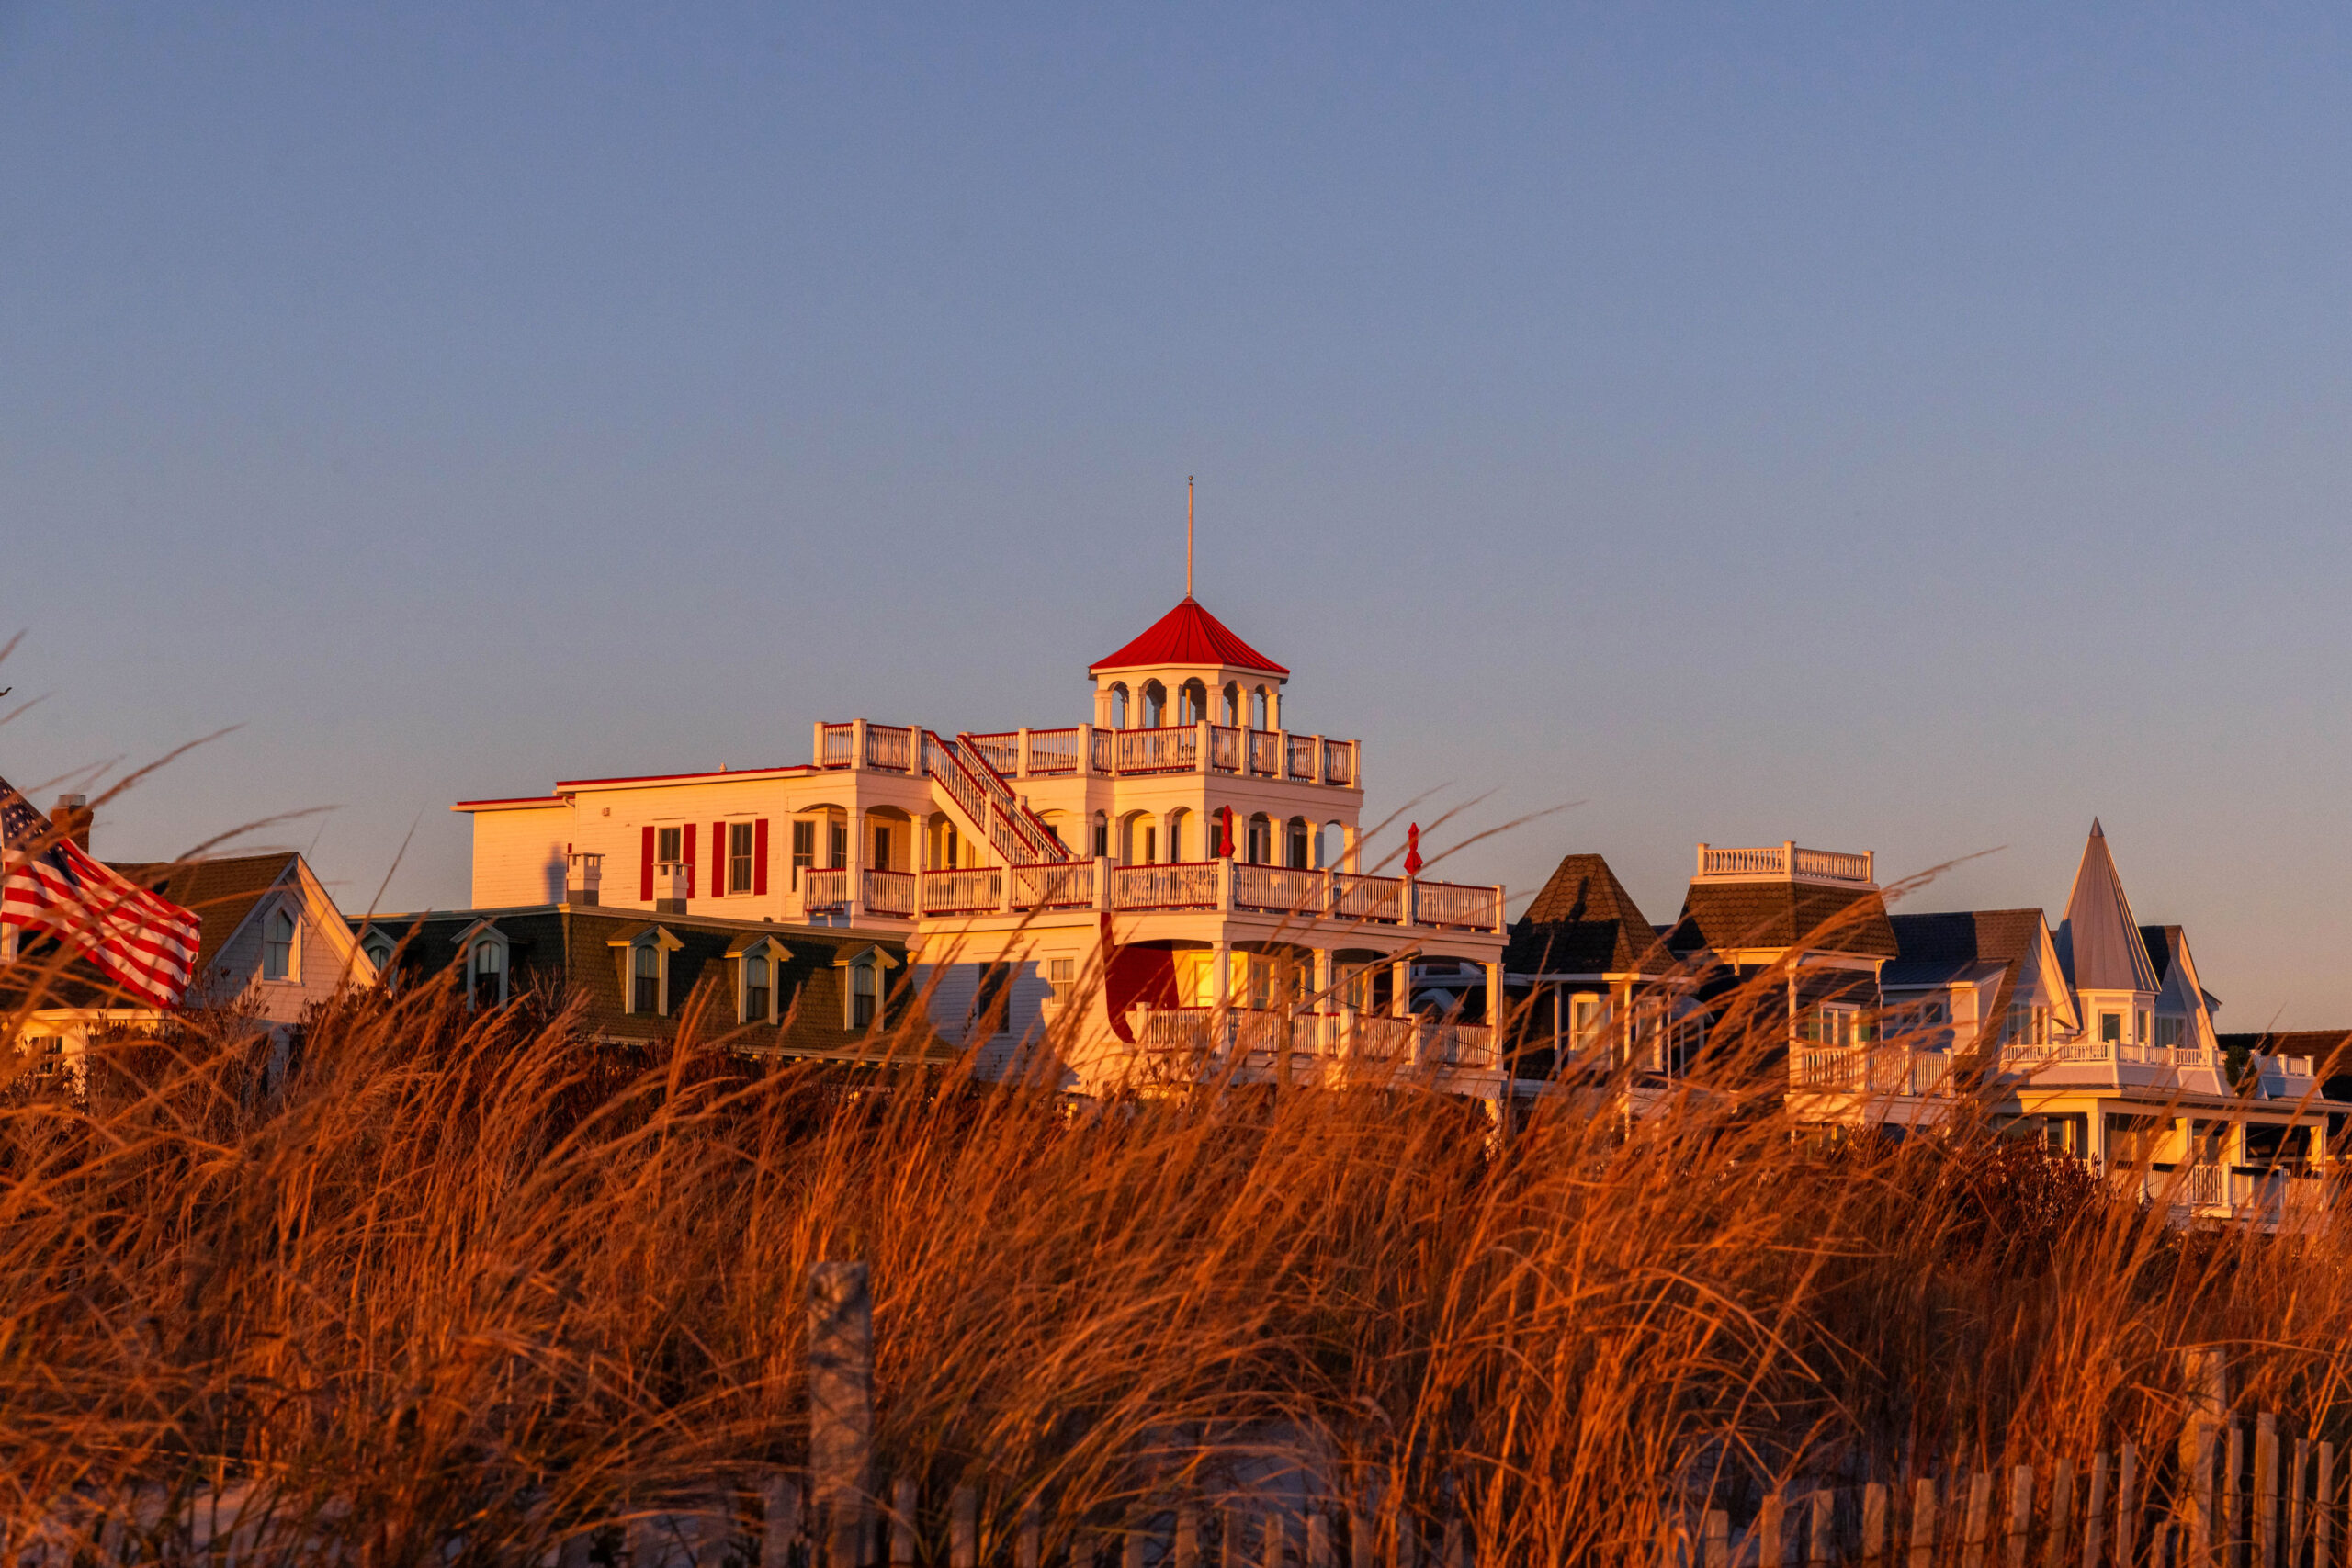 The sun shining on orange beach dunes and Victorian houses on Beach Ave.